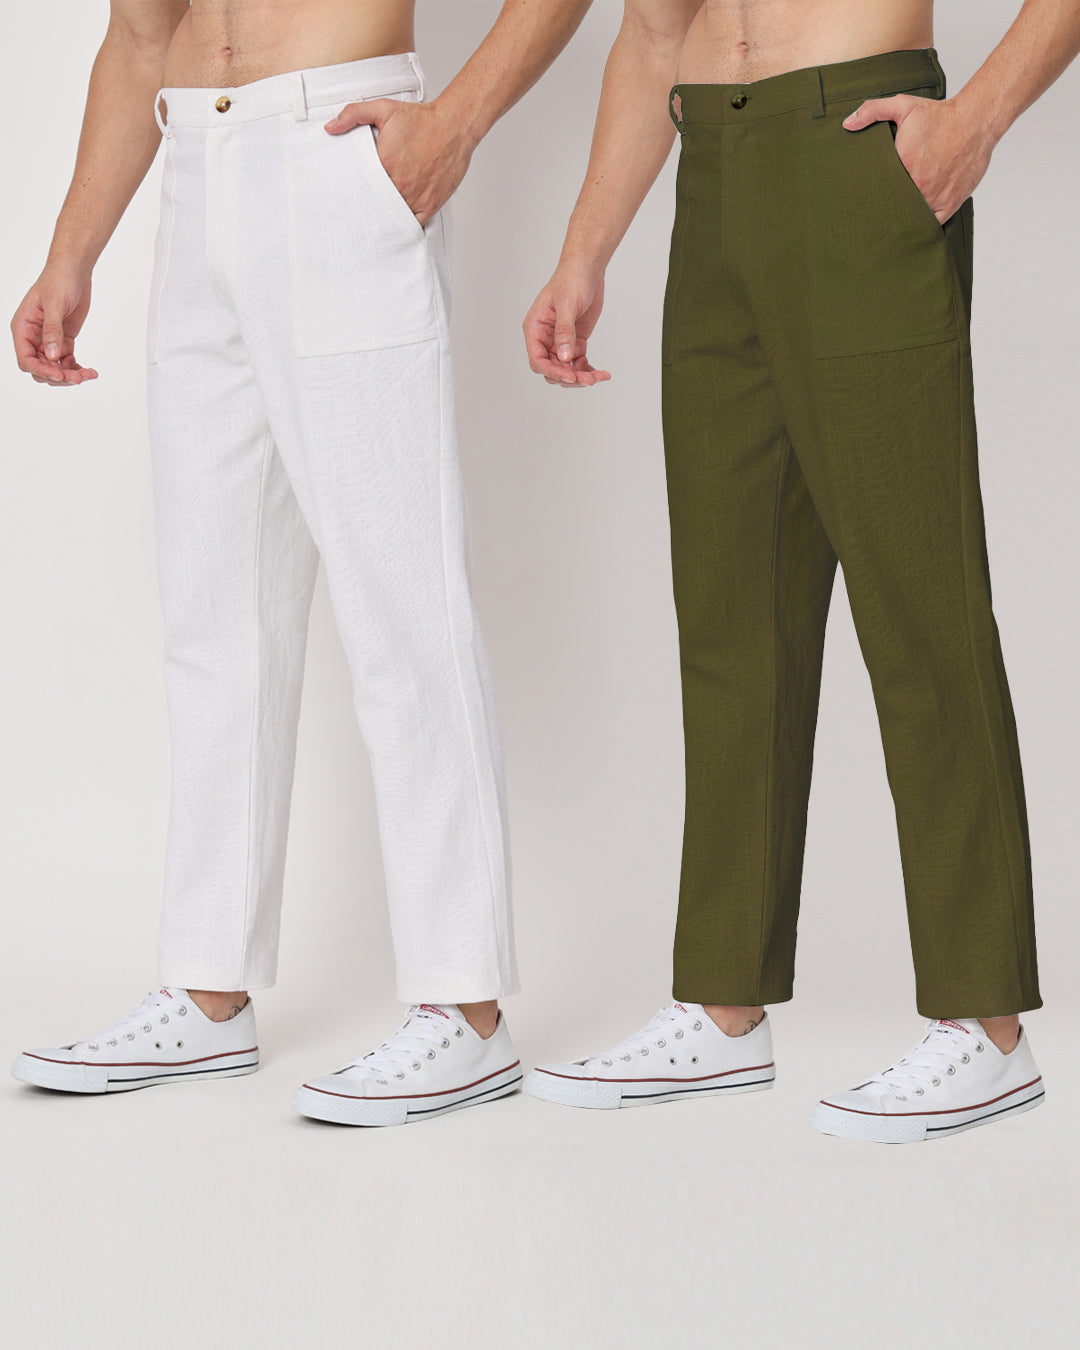 Combo : Comfy Ease White & Olive Green Men's Pants - Set of 2